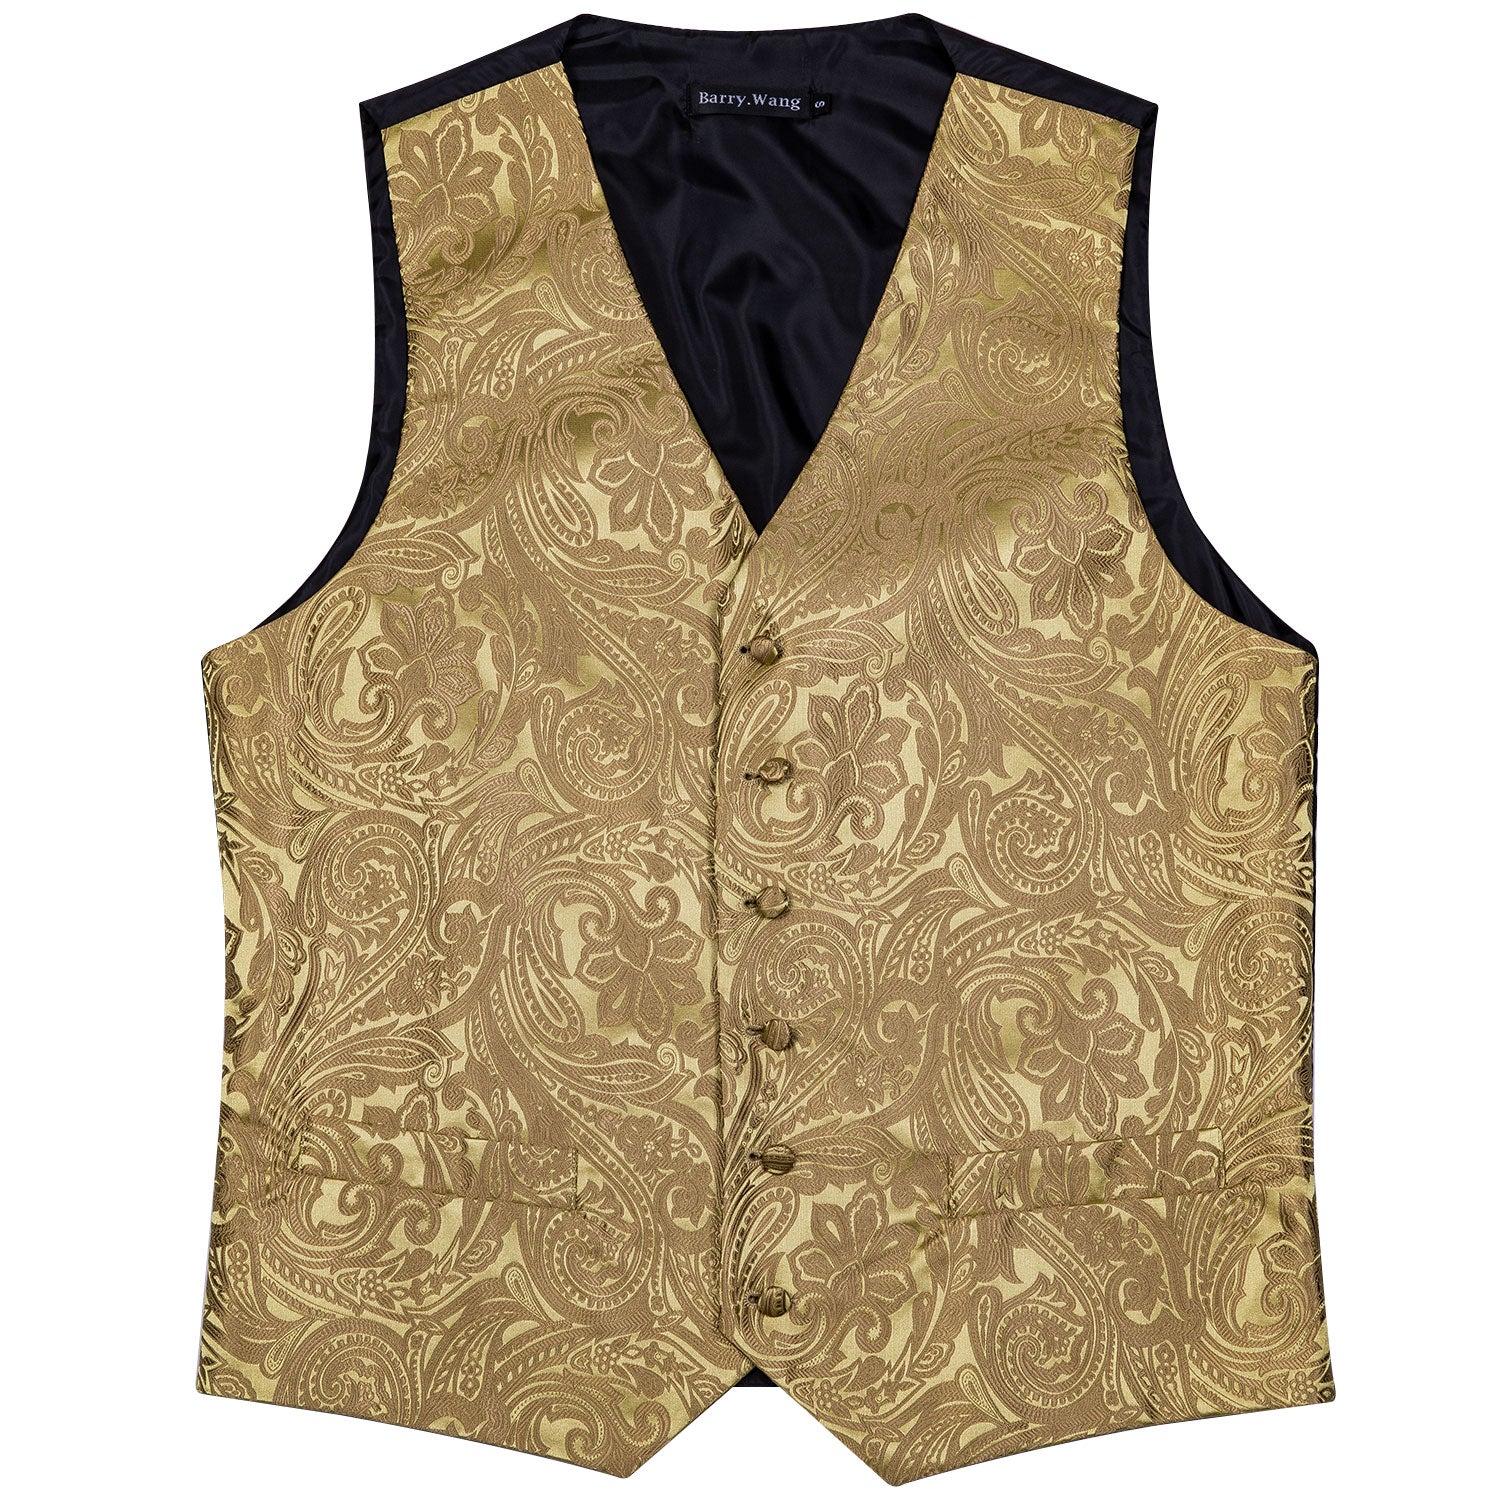 Men's Golden Floral Silk Vest Necktie Pocket square Cufflinks Set